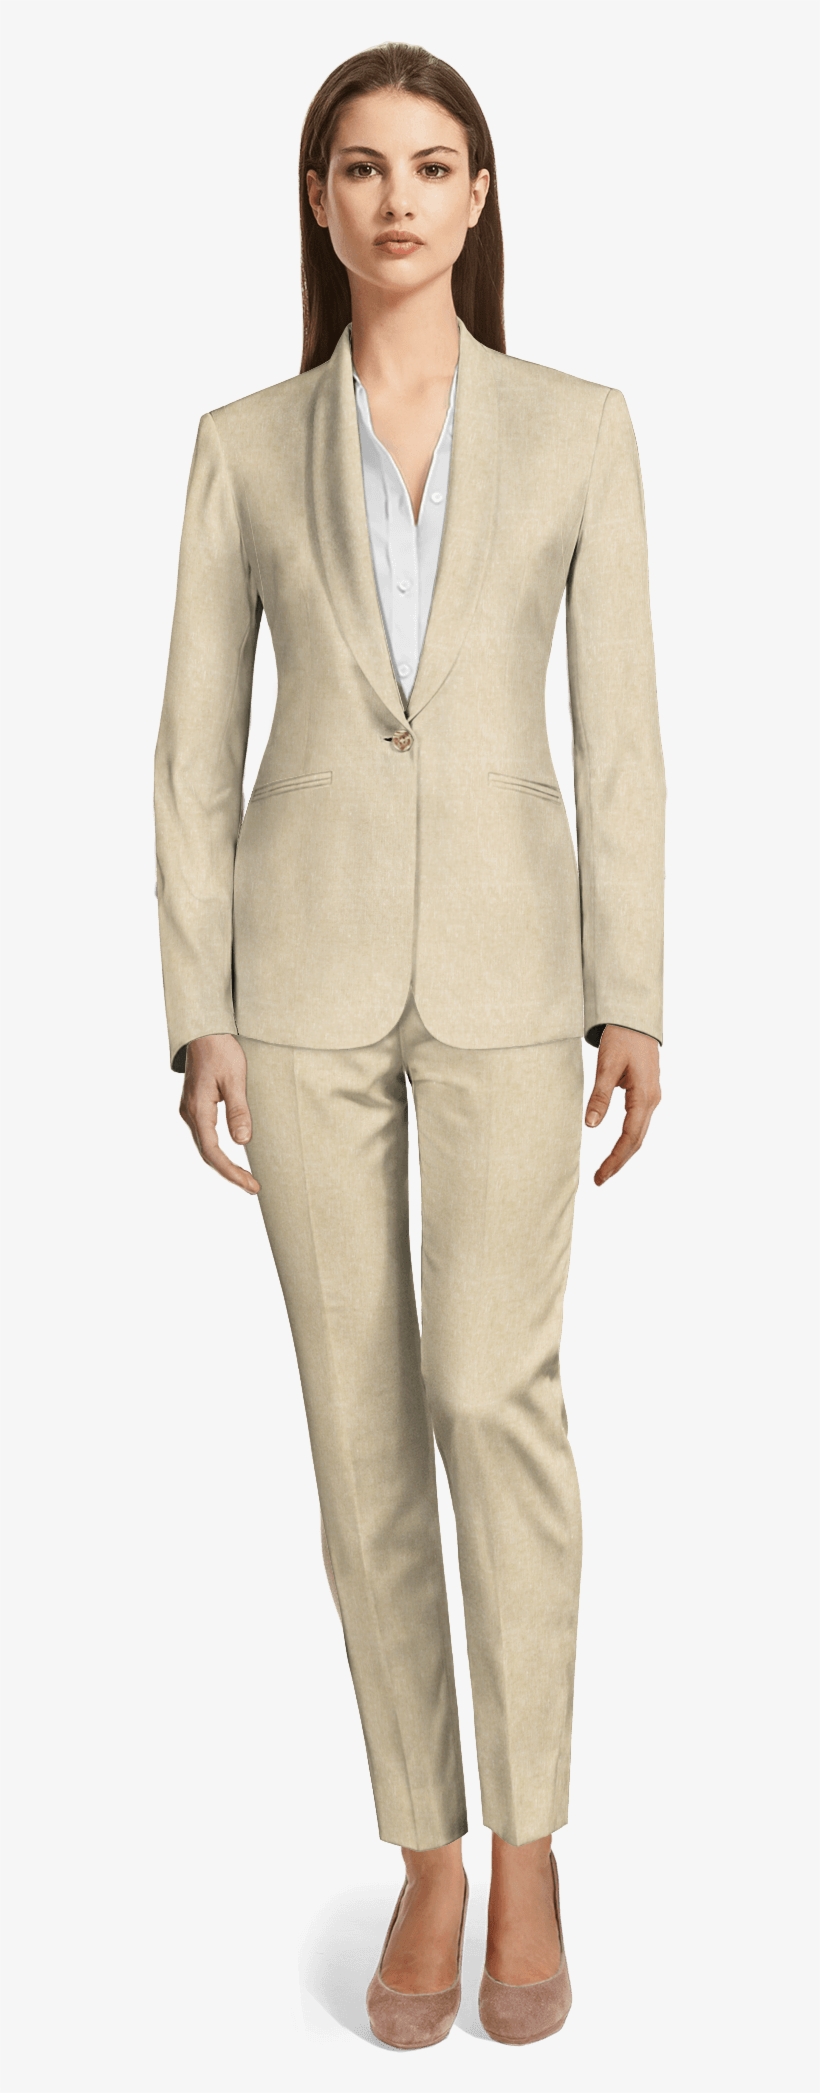 Beige Linen Pant Suit - Grey Double Breasted Suit For Women, transparent png #4434904